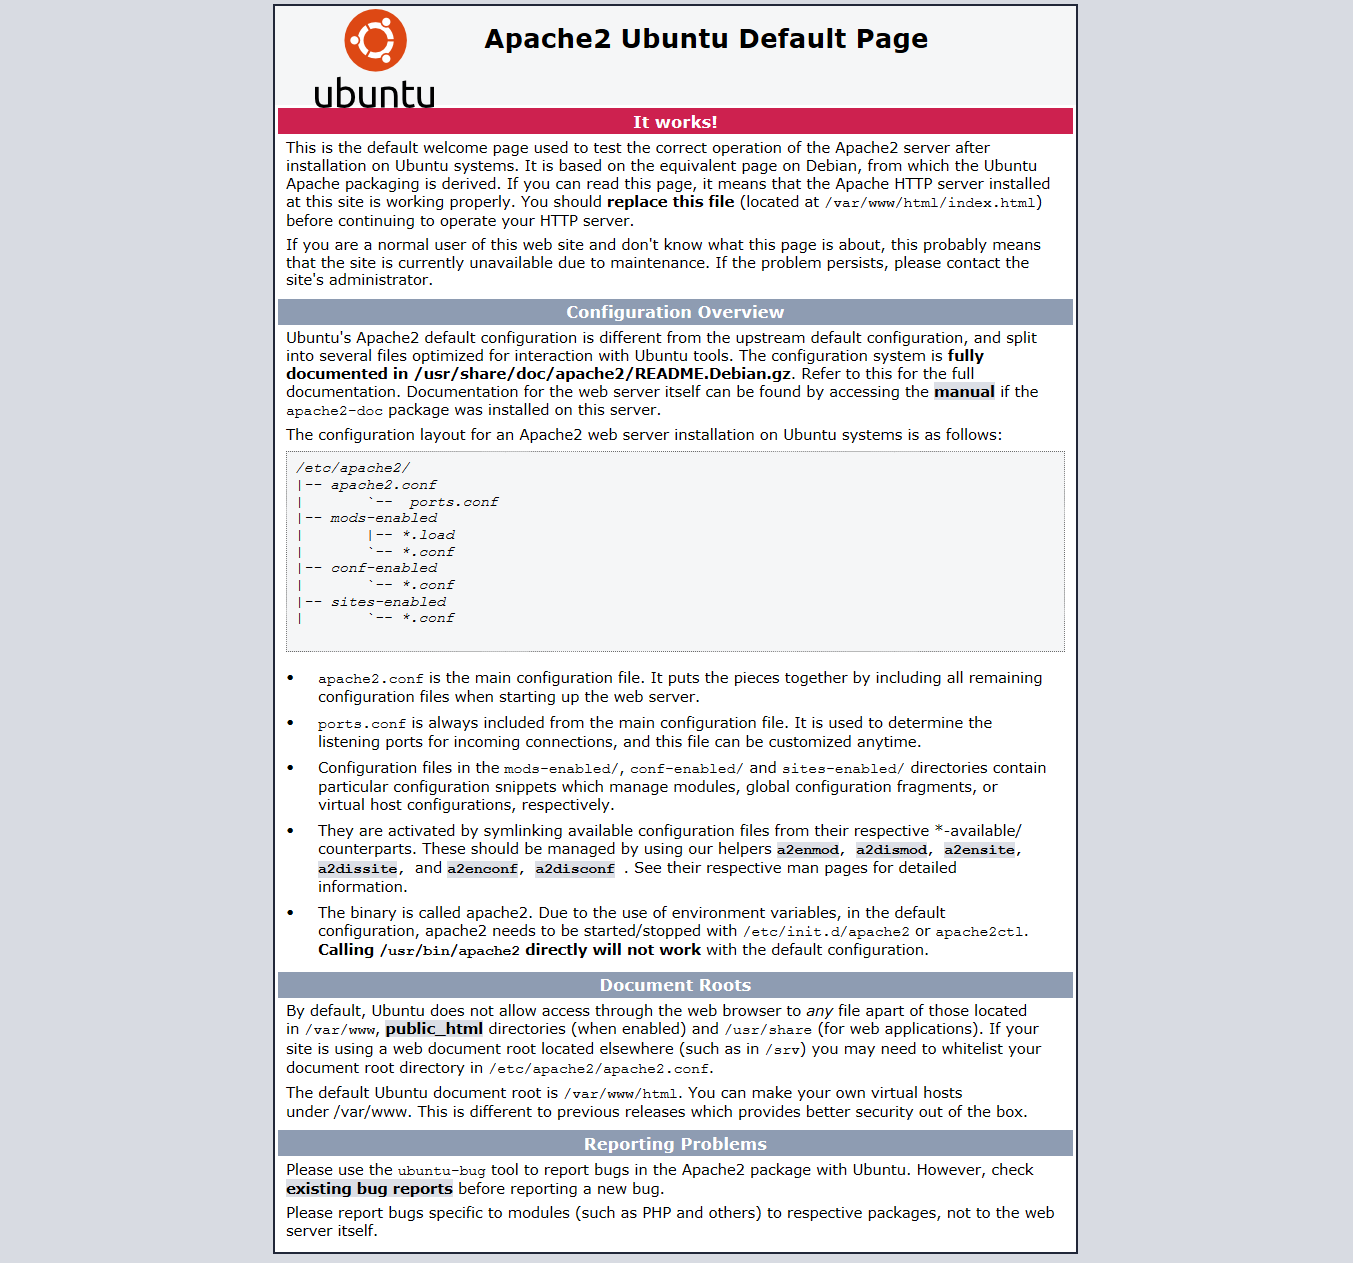 Apache2 Ubuntu Default Page_ It works.png